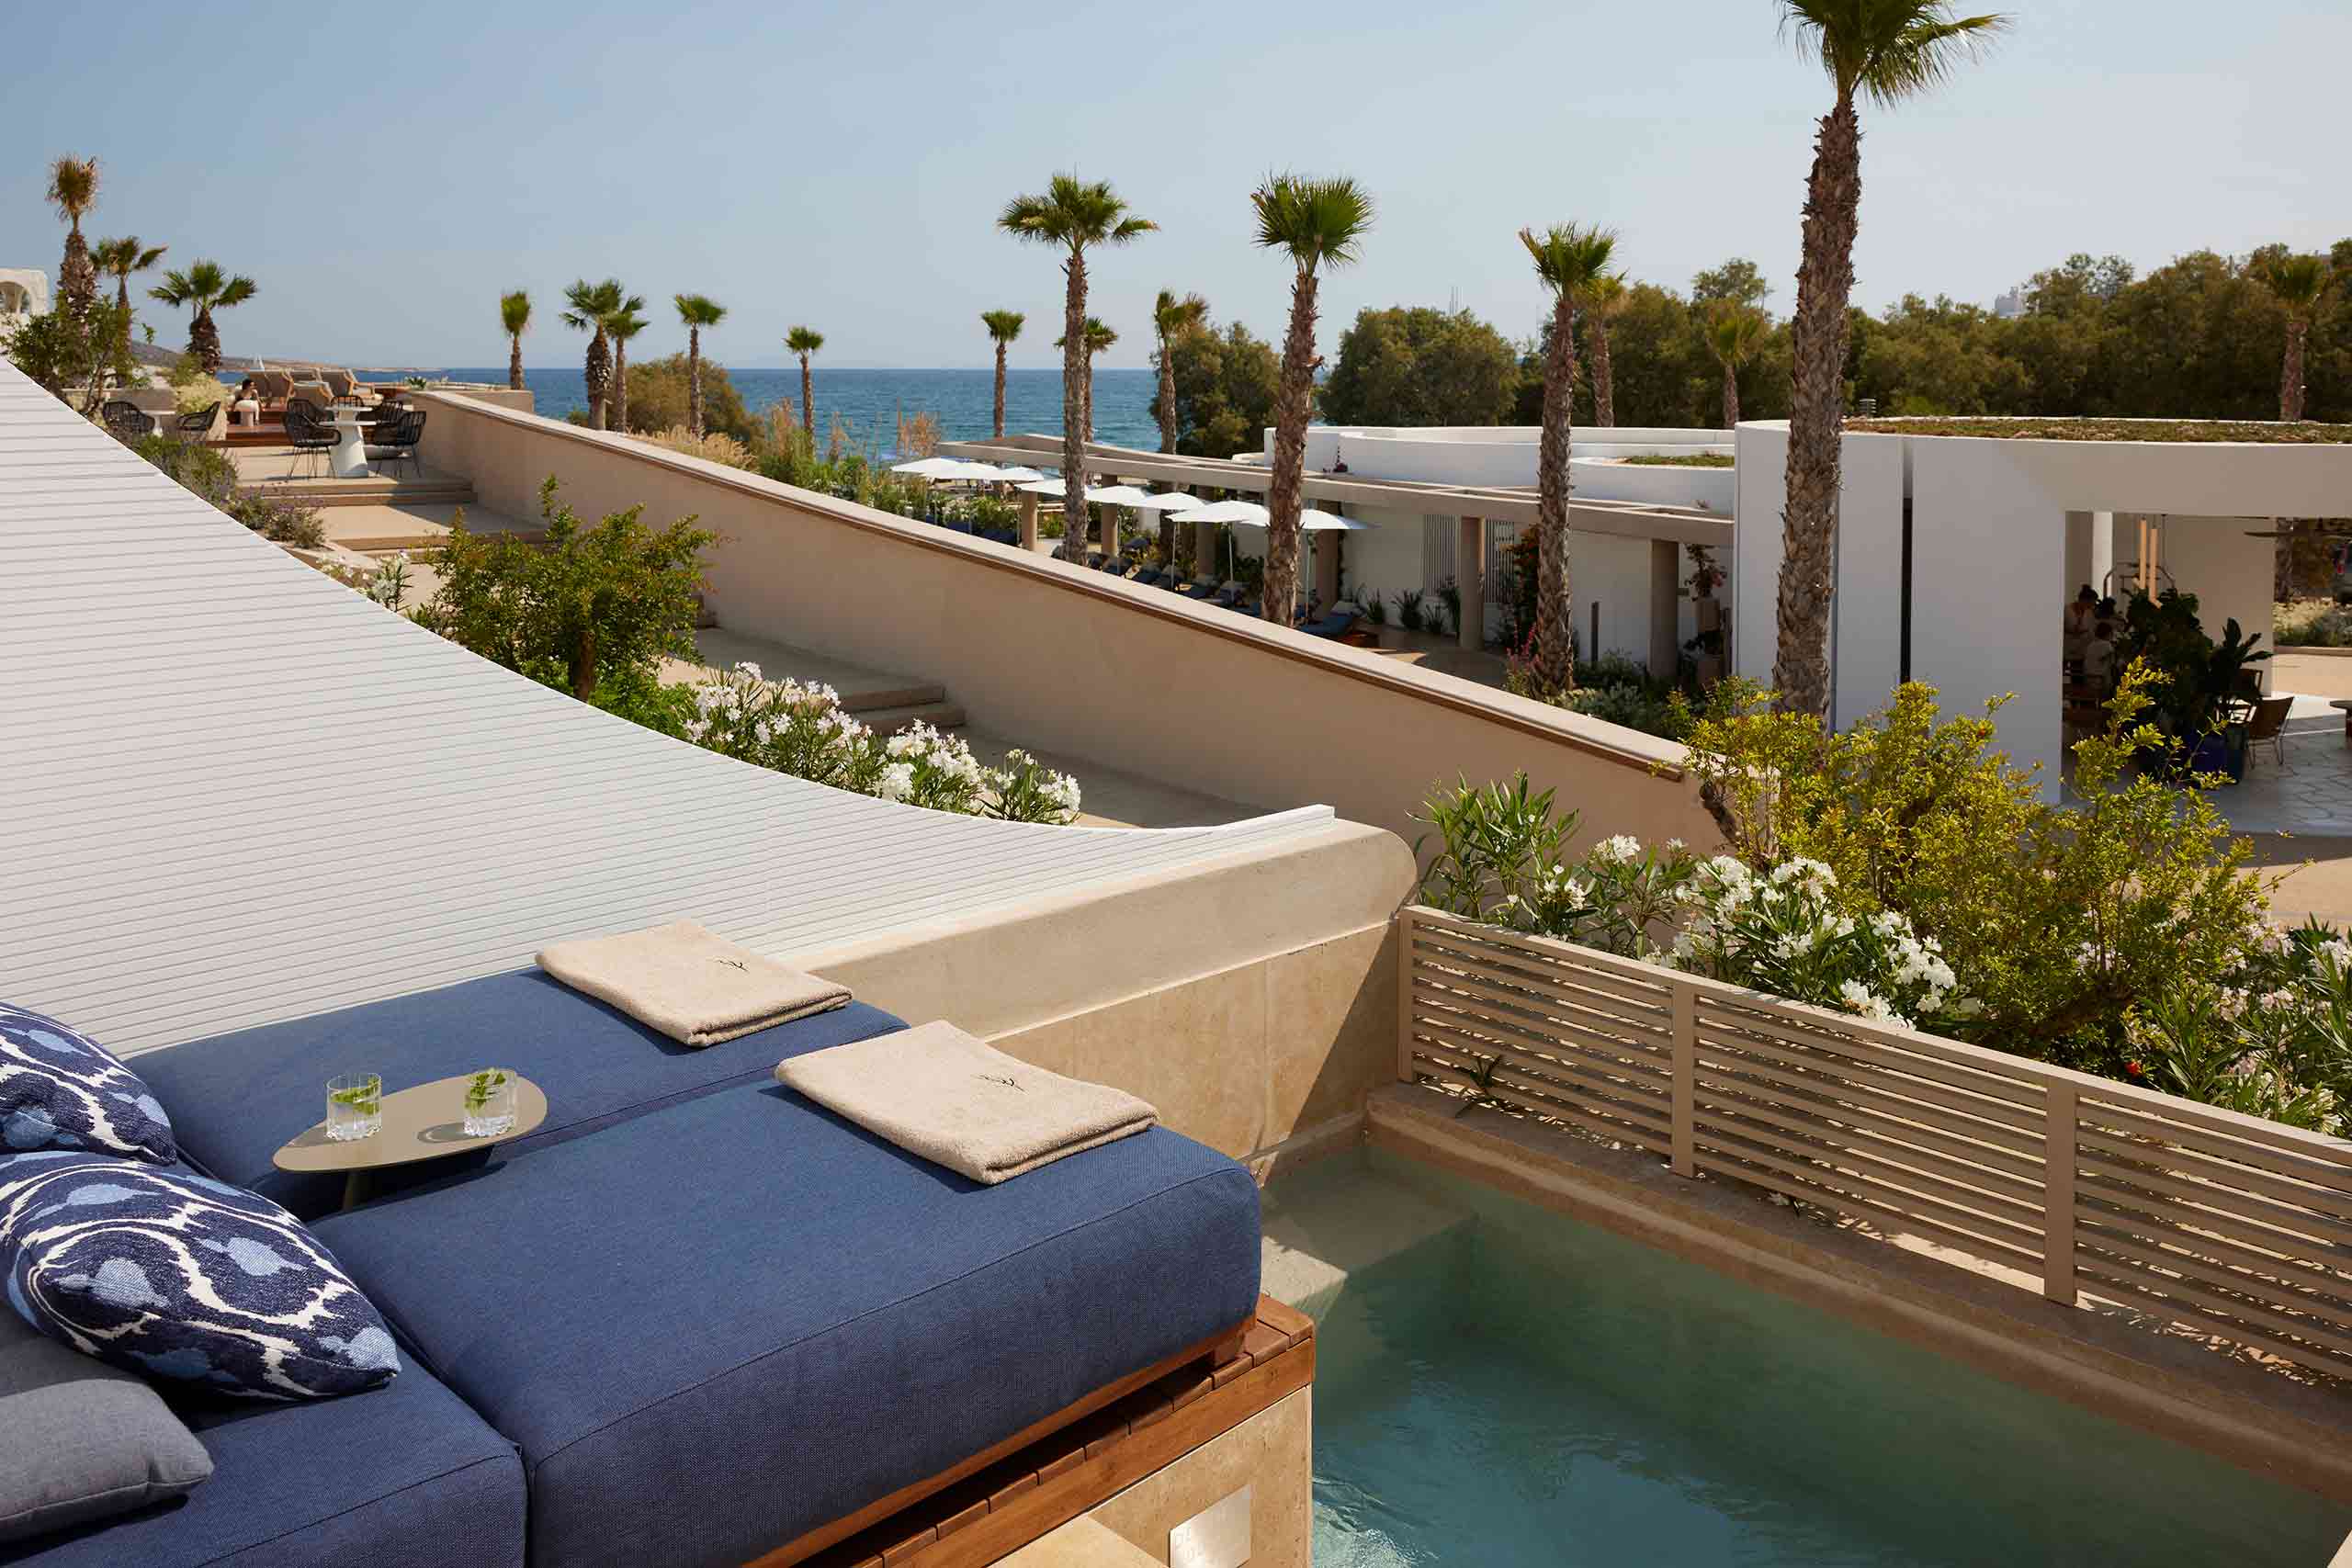 A terrace bed at Avant Mar, Paros, Greece.